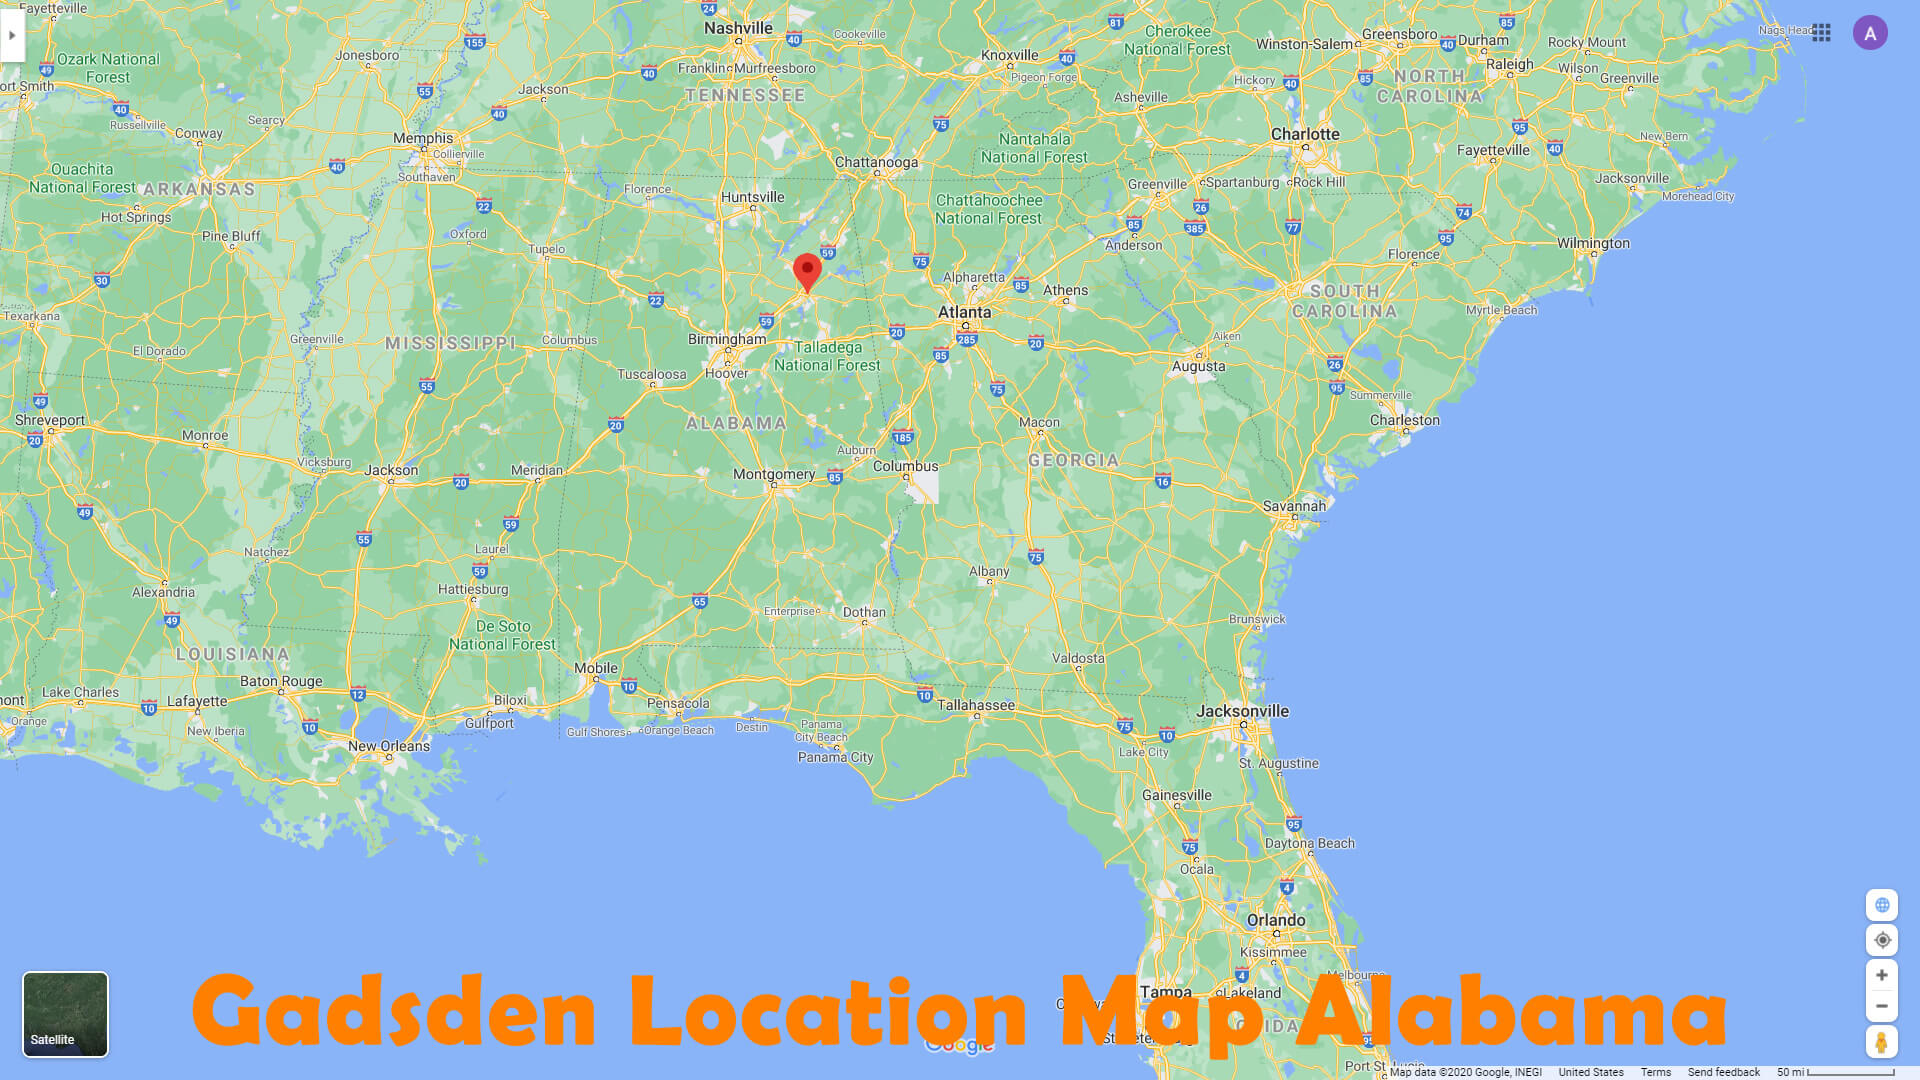 Gadsden Location Map Alabama